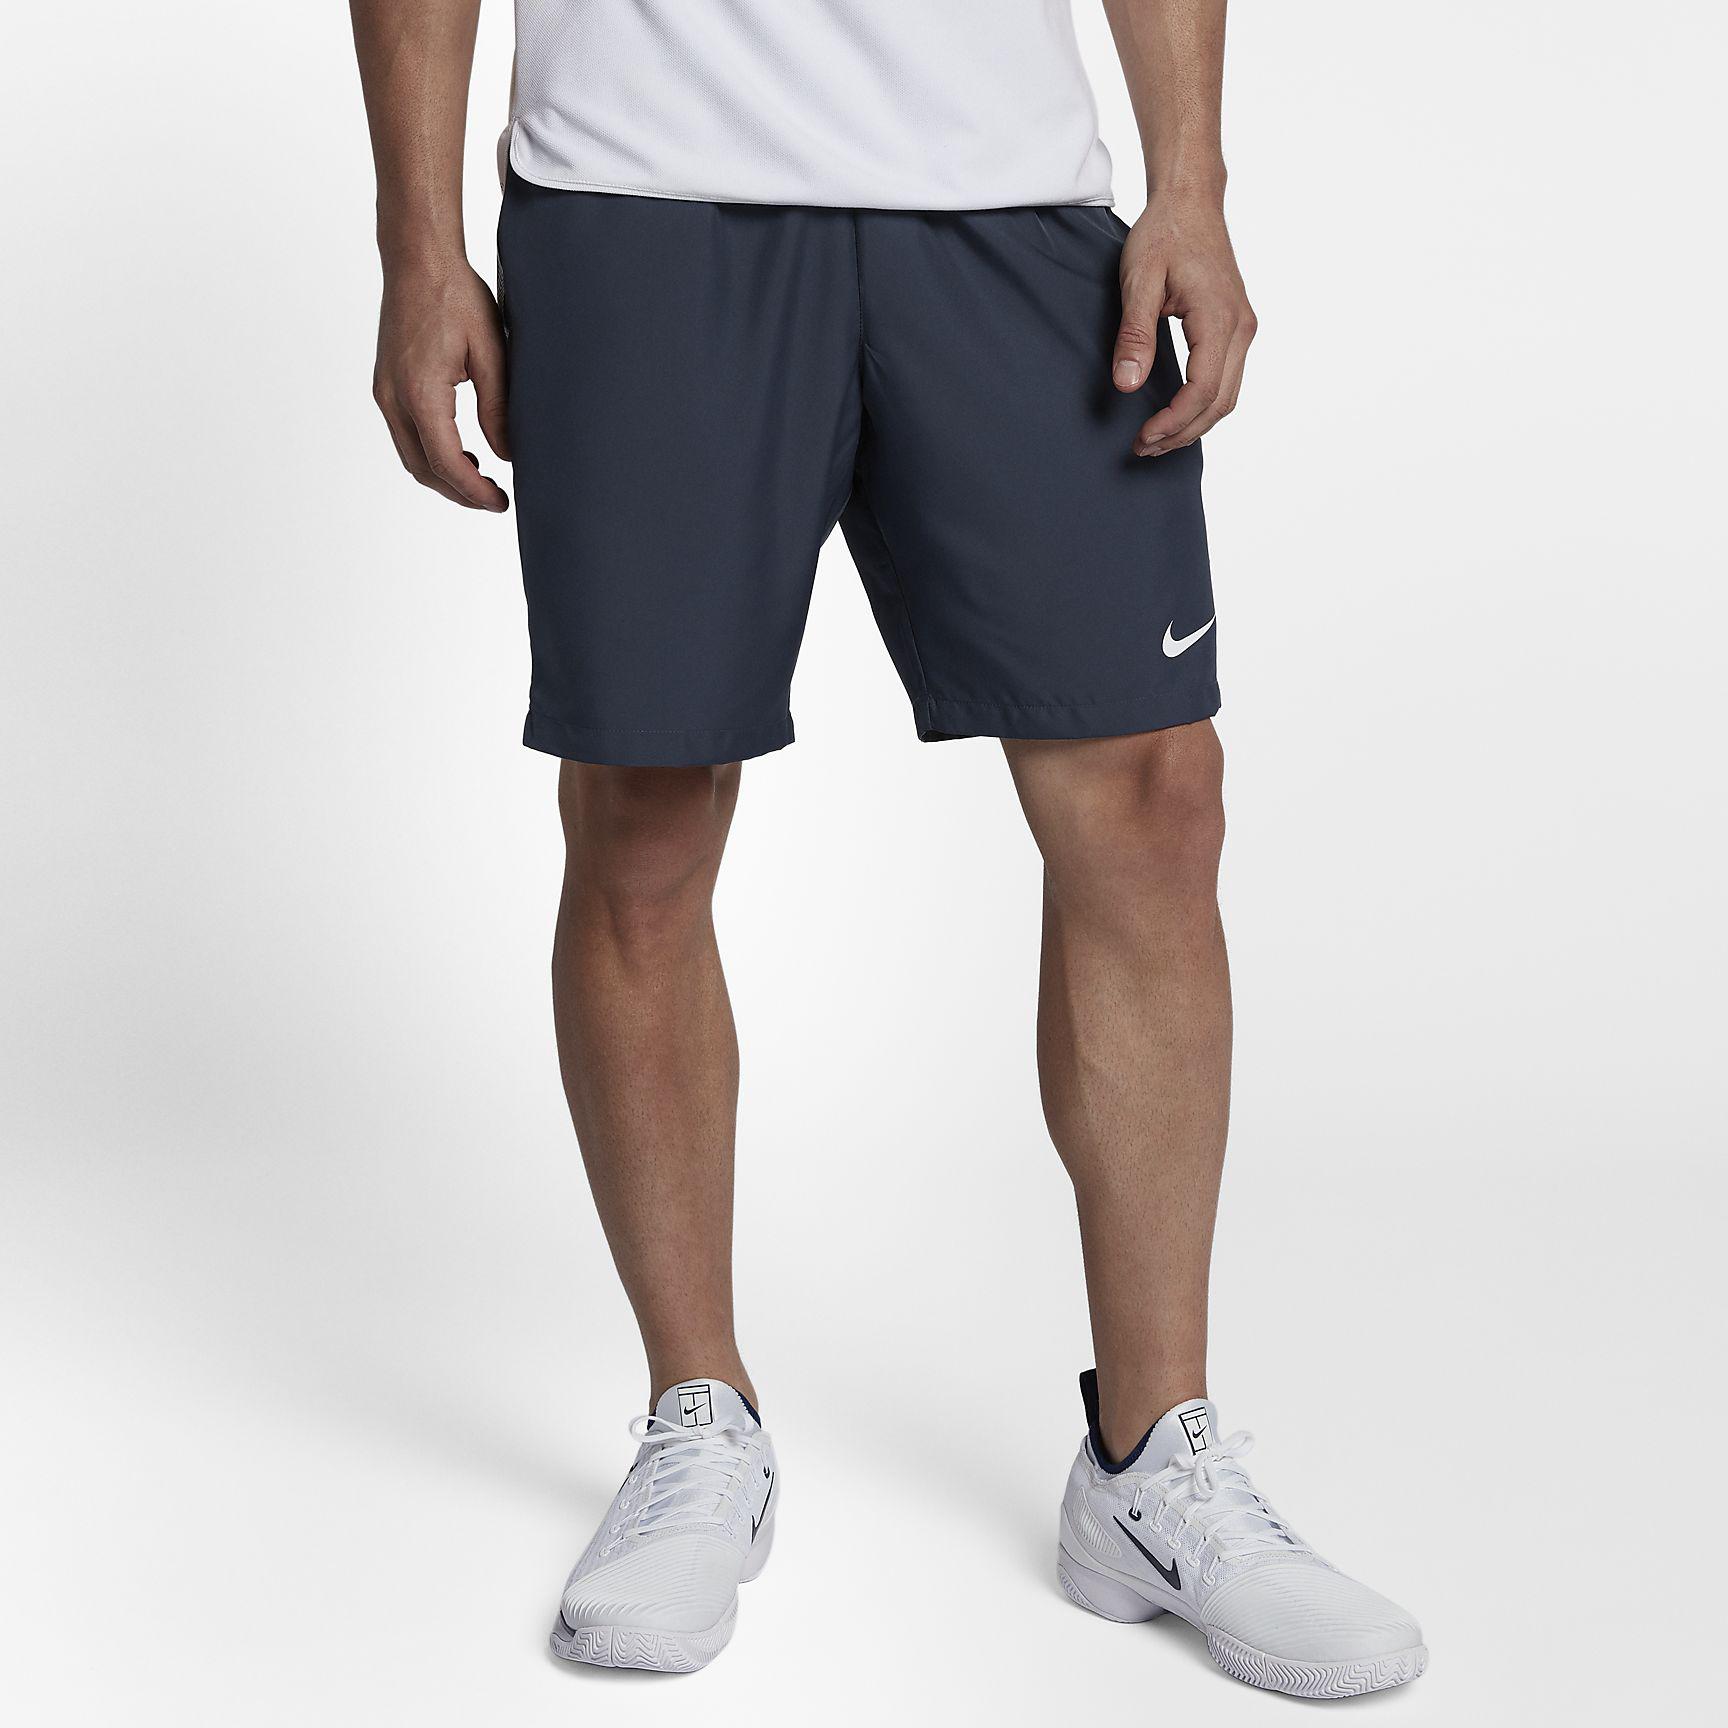 Nike Mens Dry 9 Inch Tennis Shorts - Thunder Blue/White - Tennisnuts.com